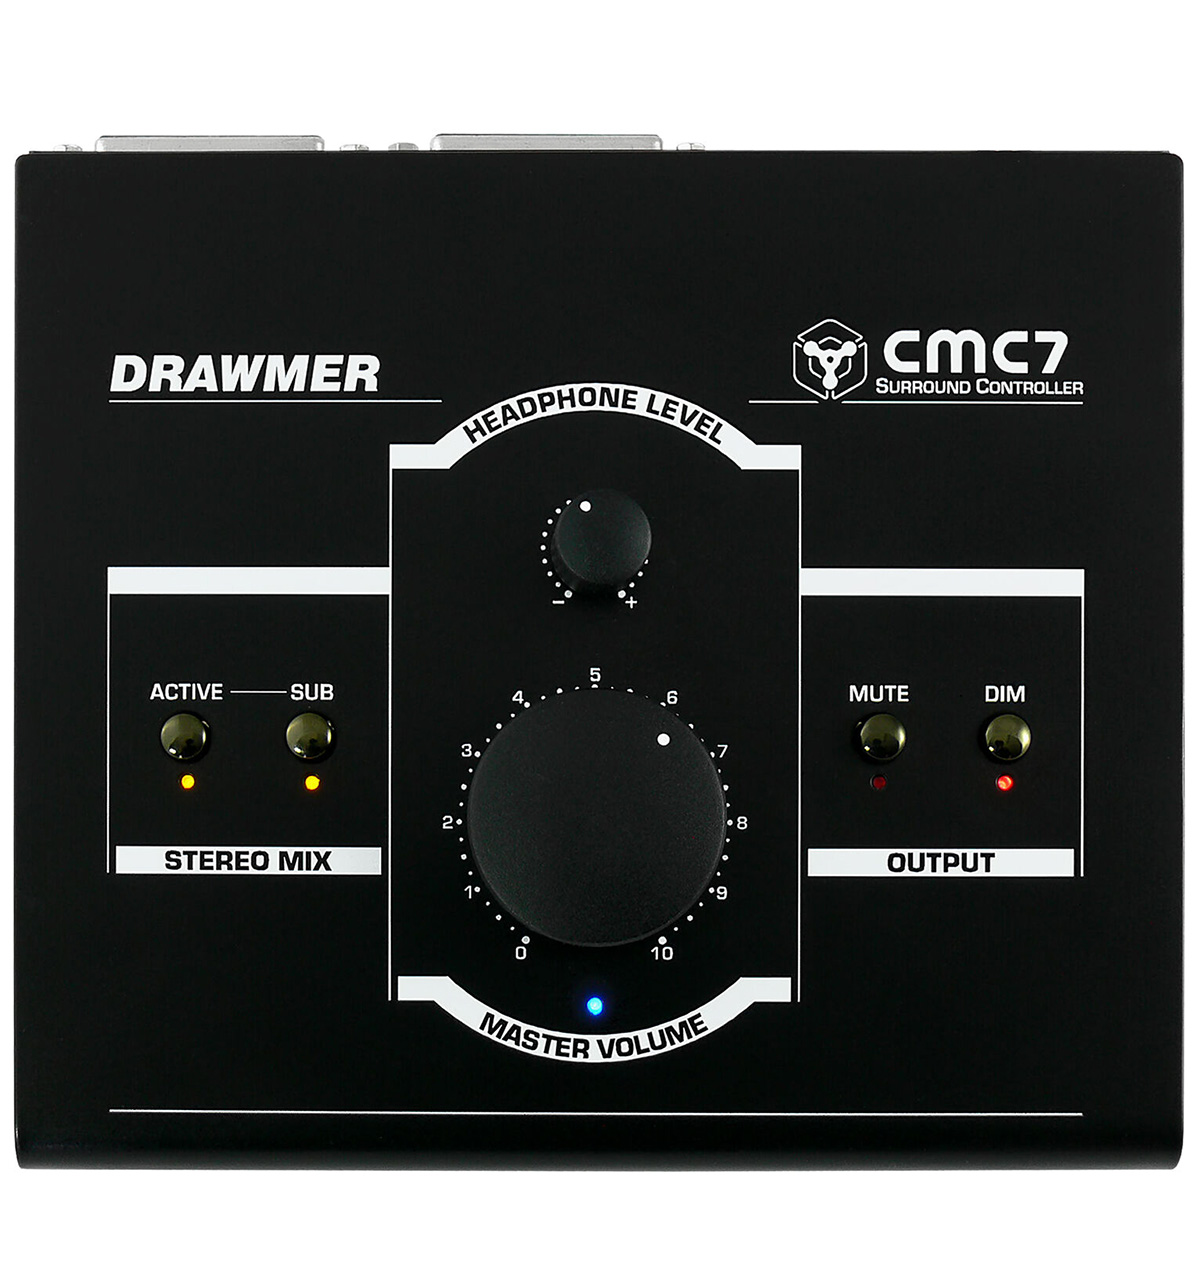 MONITOR CONTROL DRAWMER CMC7